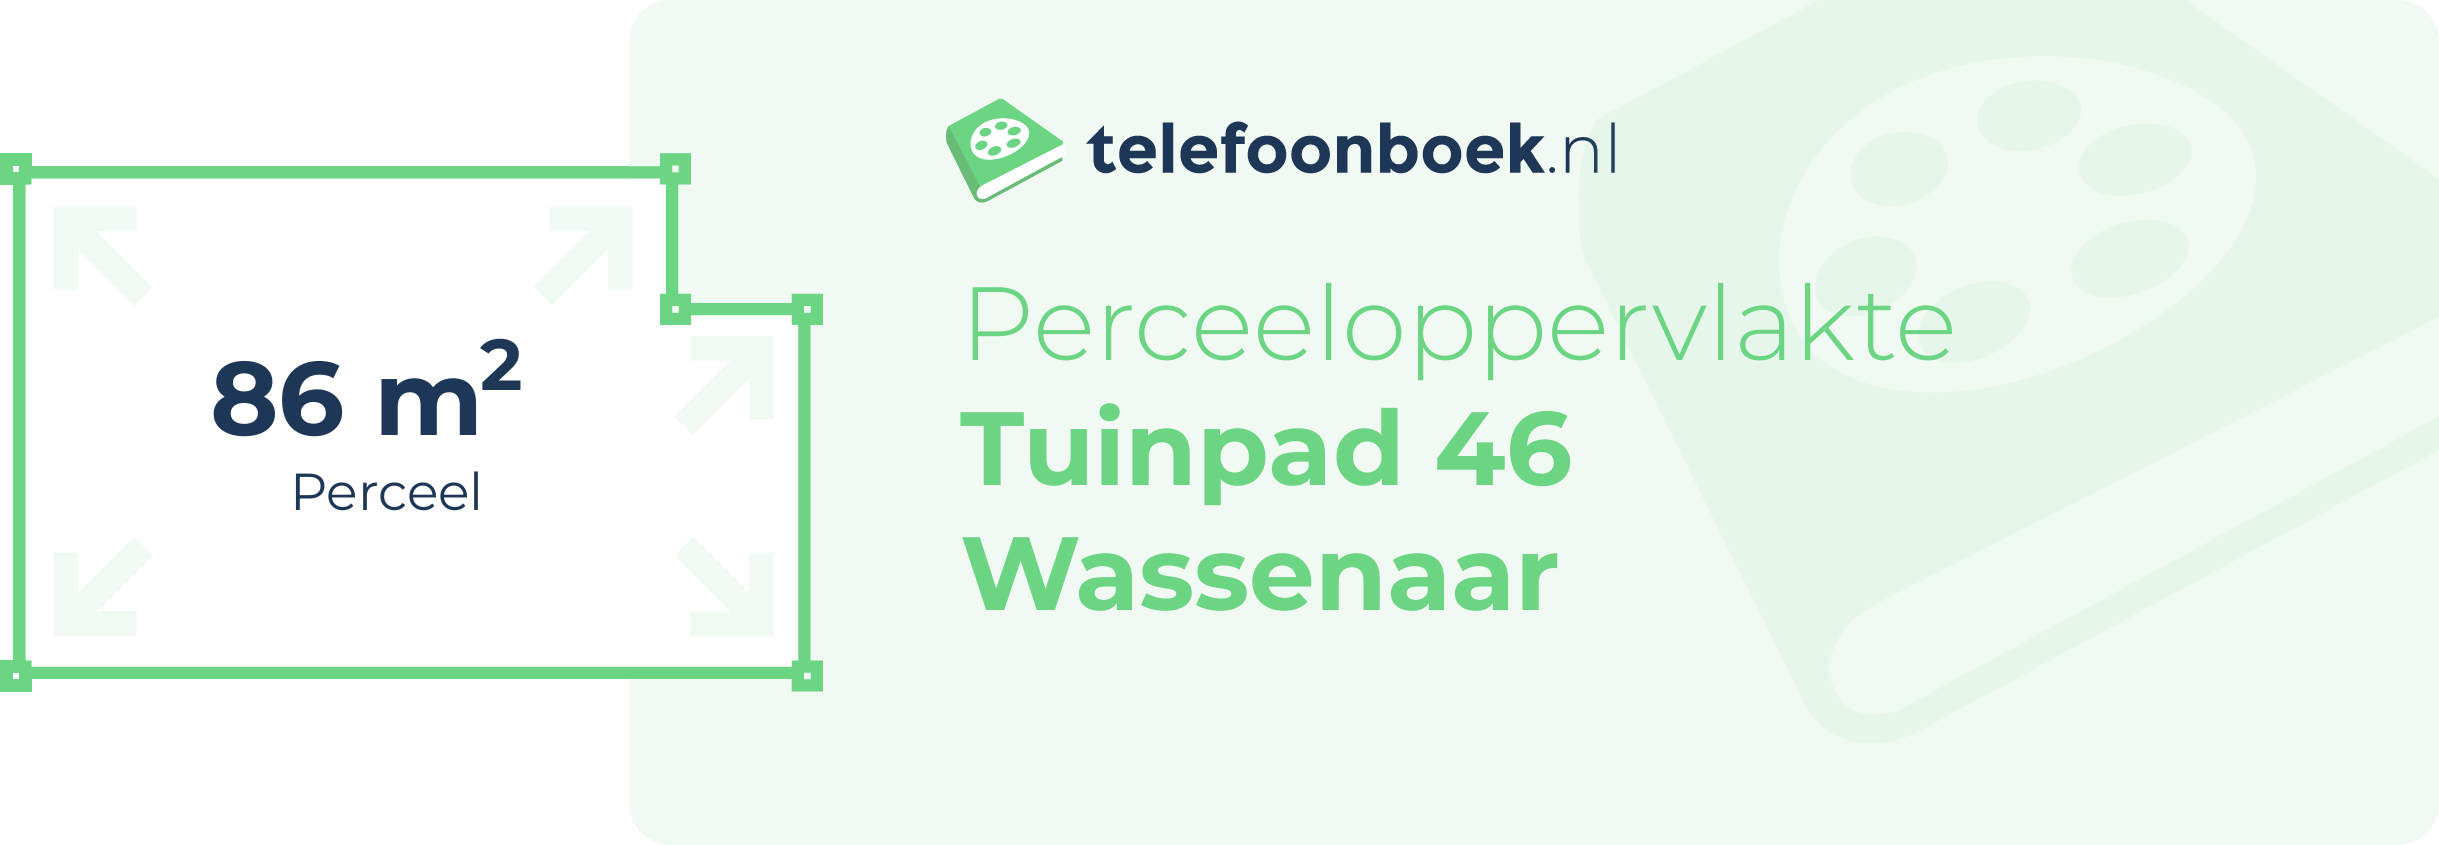 Perceeloppervlakte Tuinpad 46 Wassenaar